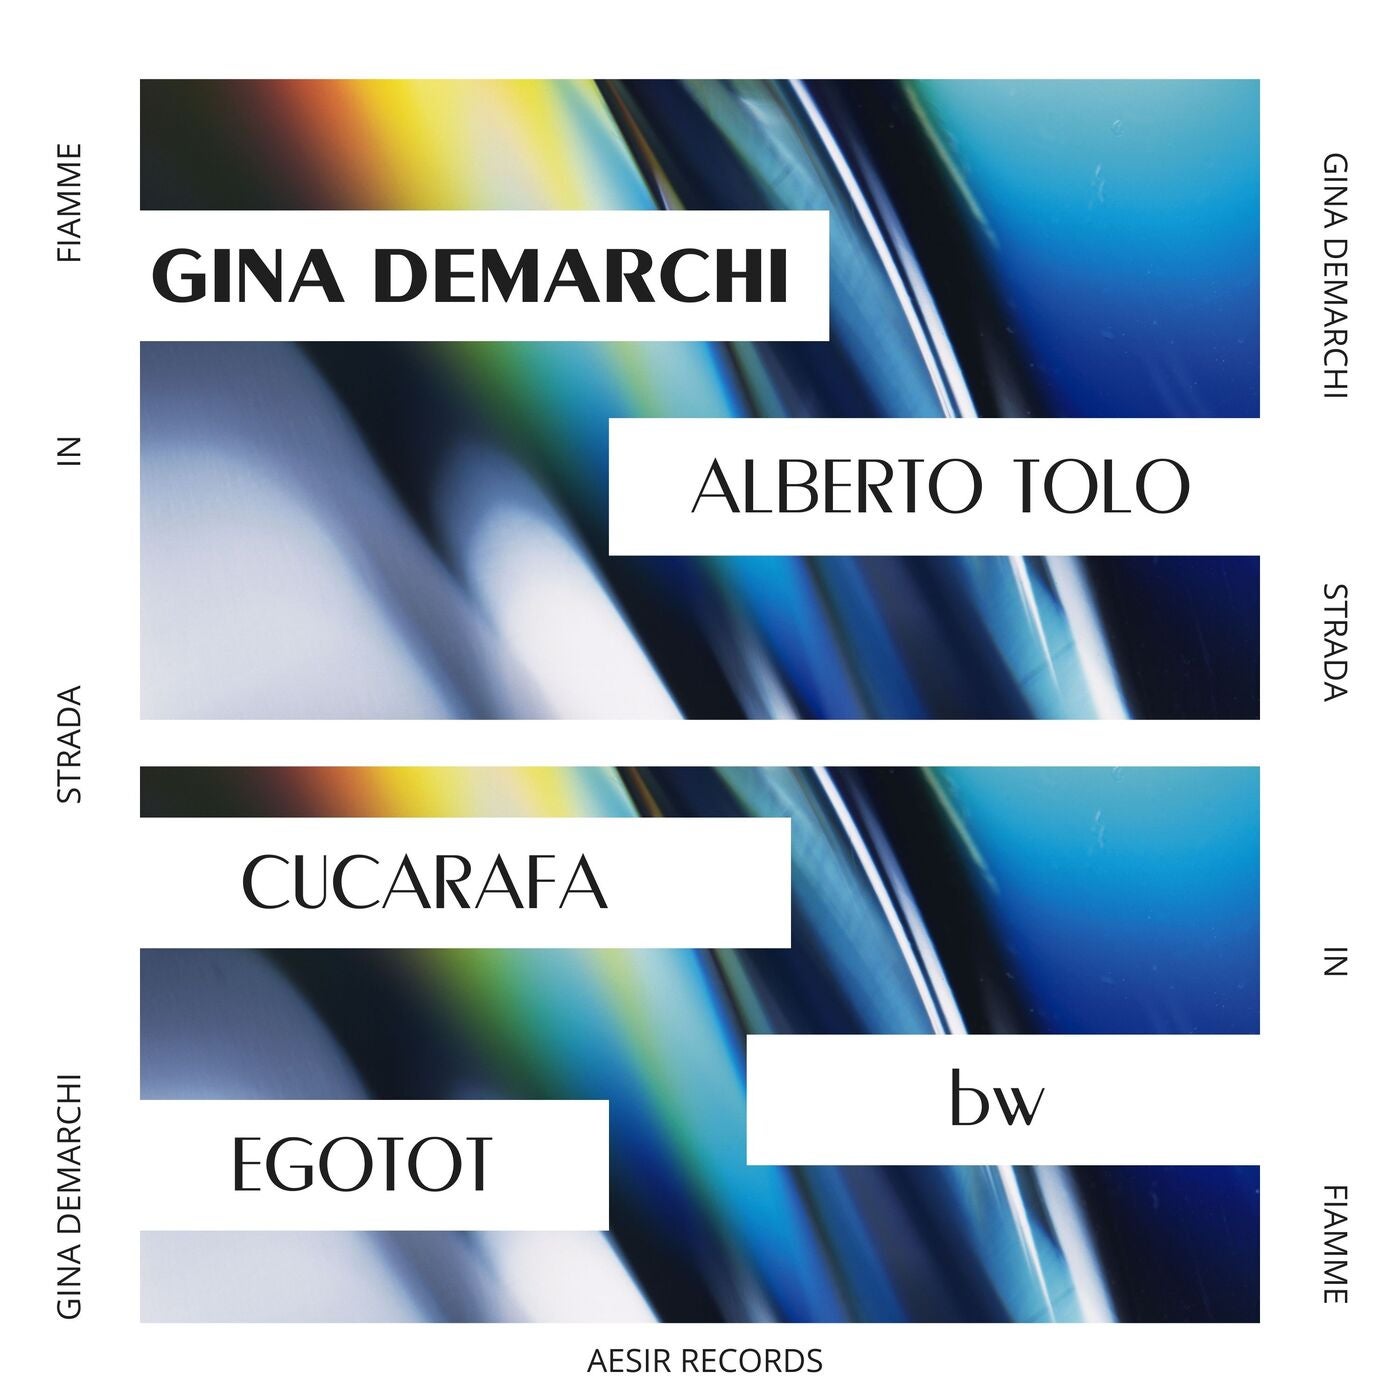 Gina Demarchi - Strada In Fiamme [AESIR Records]